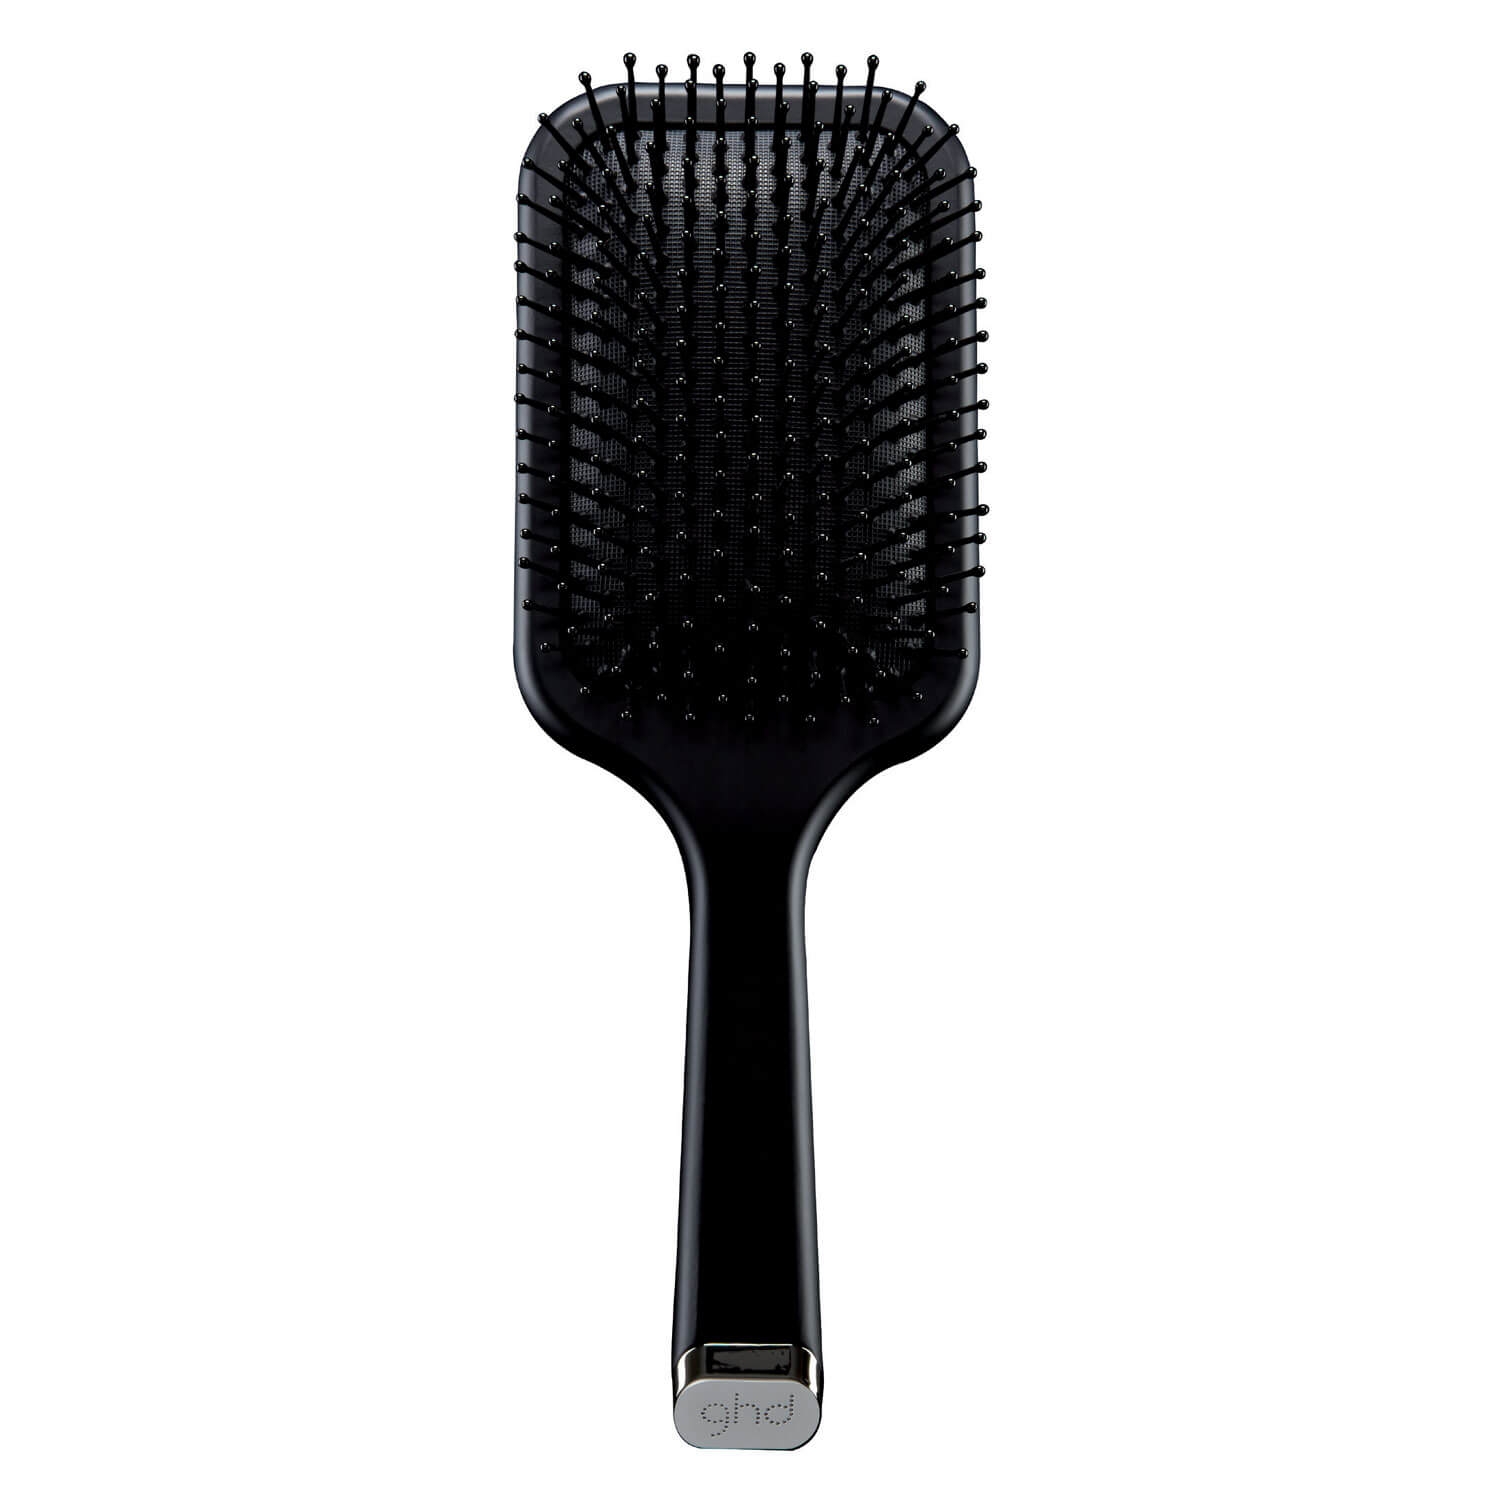 Produktbild von ghd Brushes - The All Rounder Paddle Brush